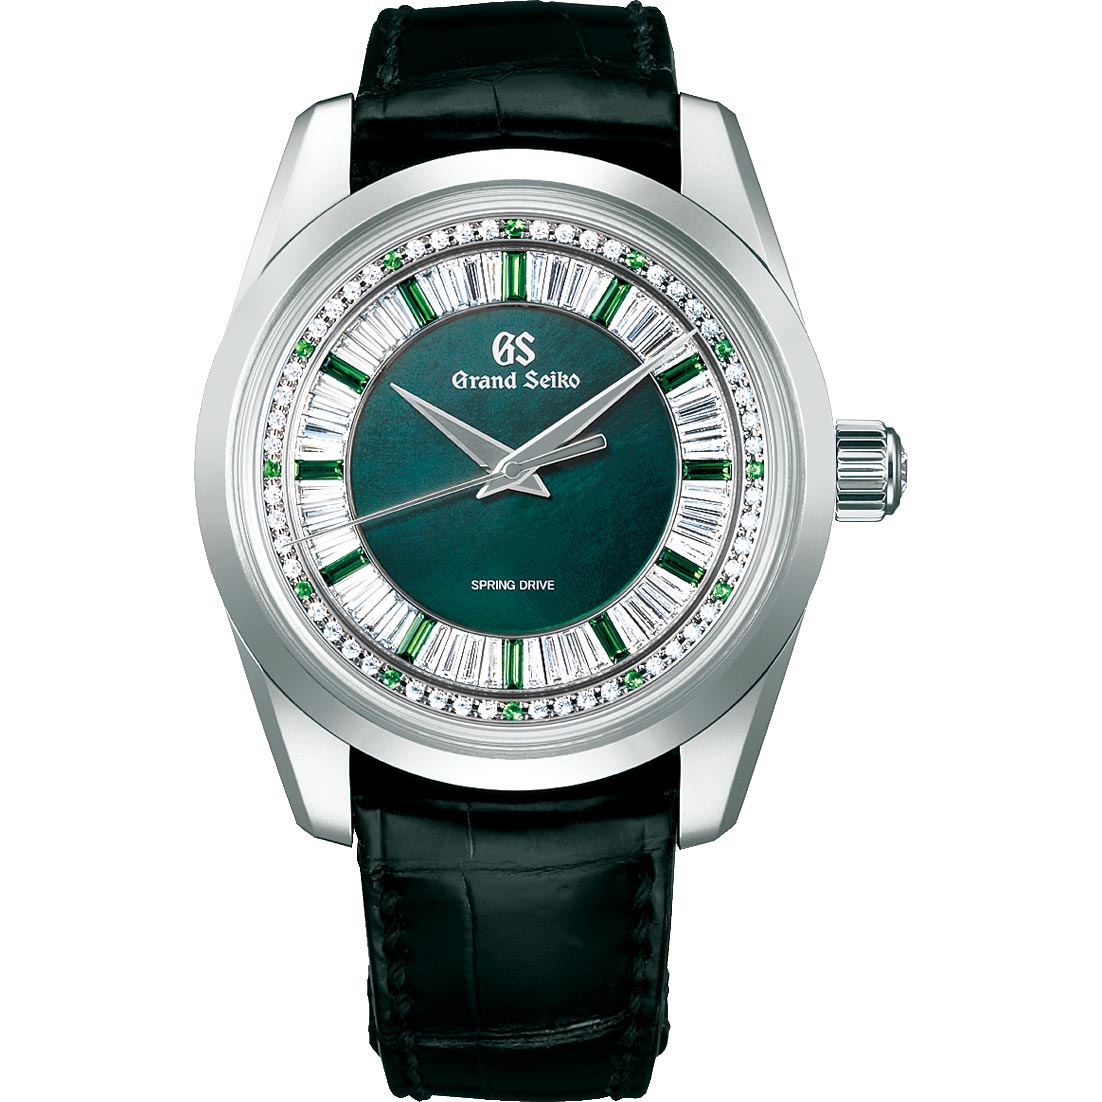 Grand Seiko SBGD207 green jewelry dial Masterpiece watch